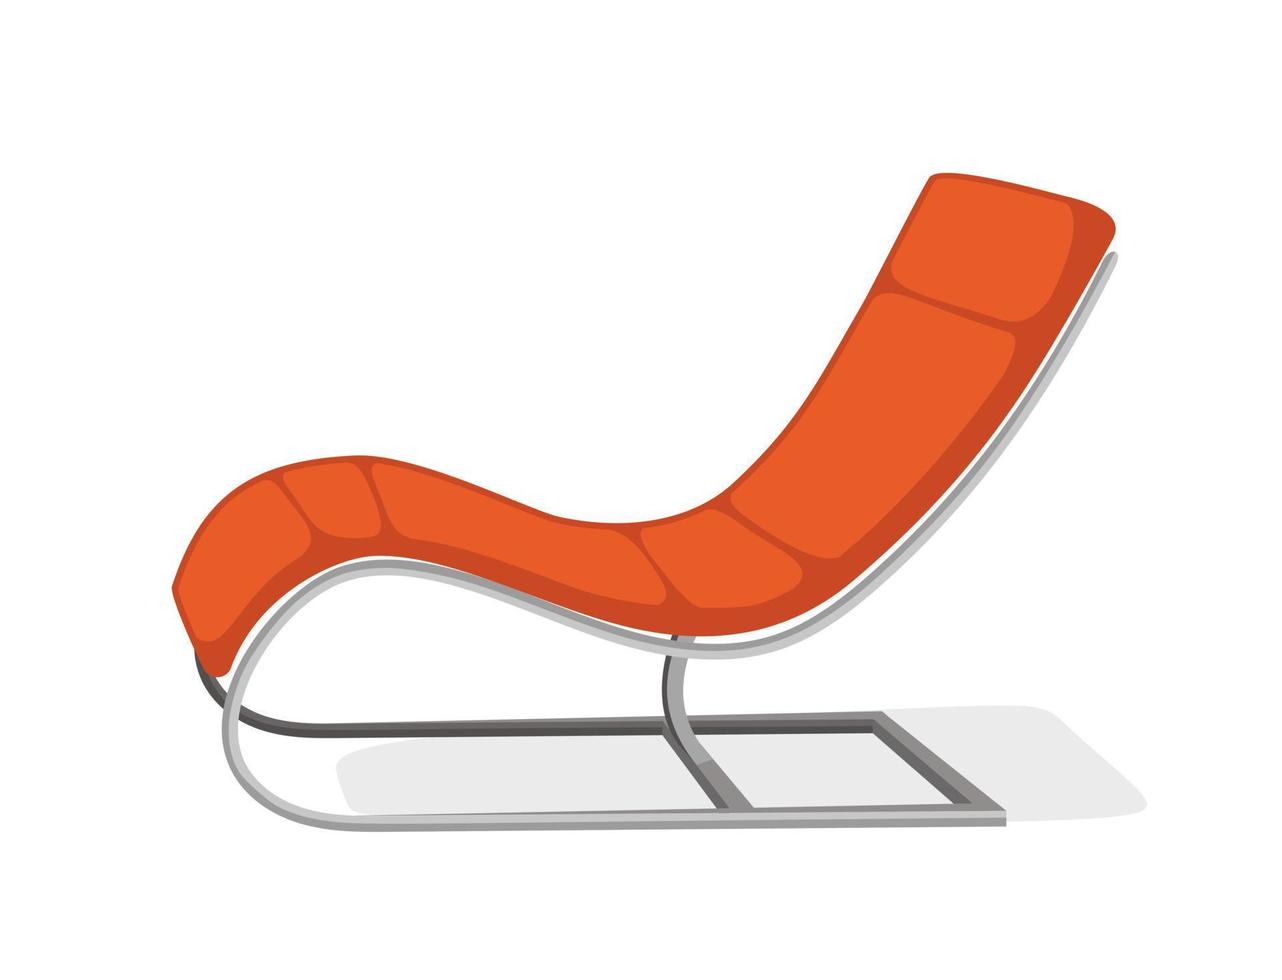 sillón sofá naranja muebles interiores modernos ilustración vectorial en un estilo plano aislado vector